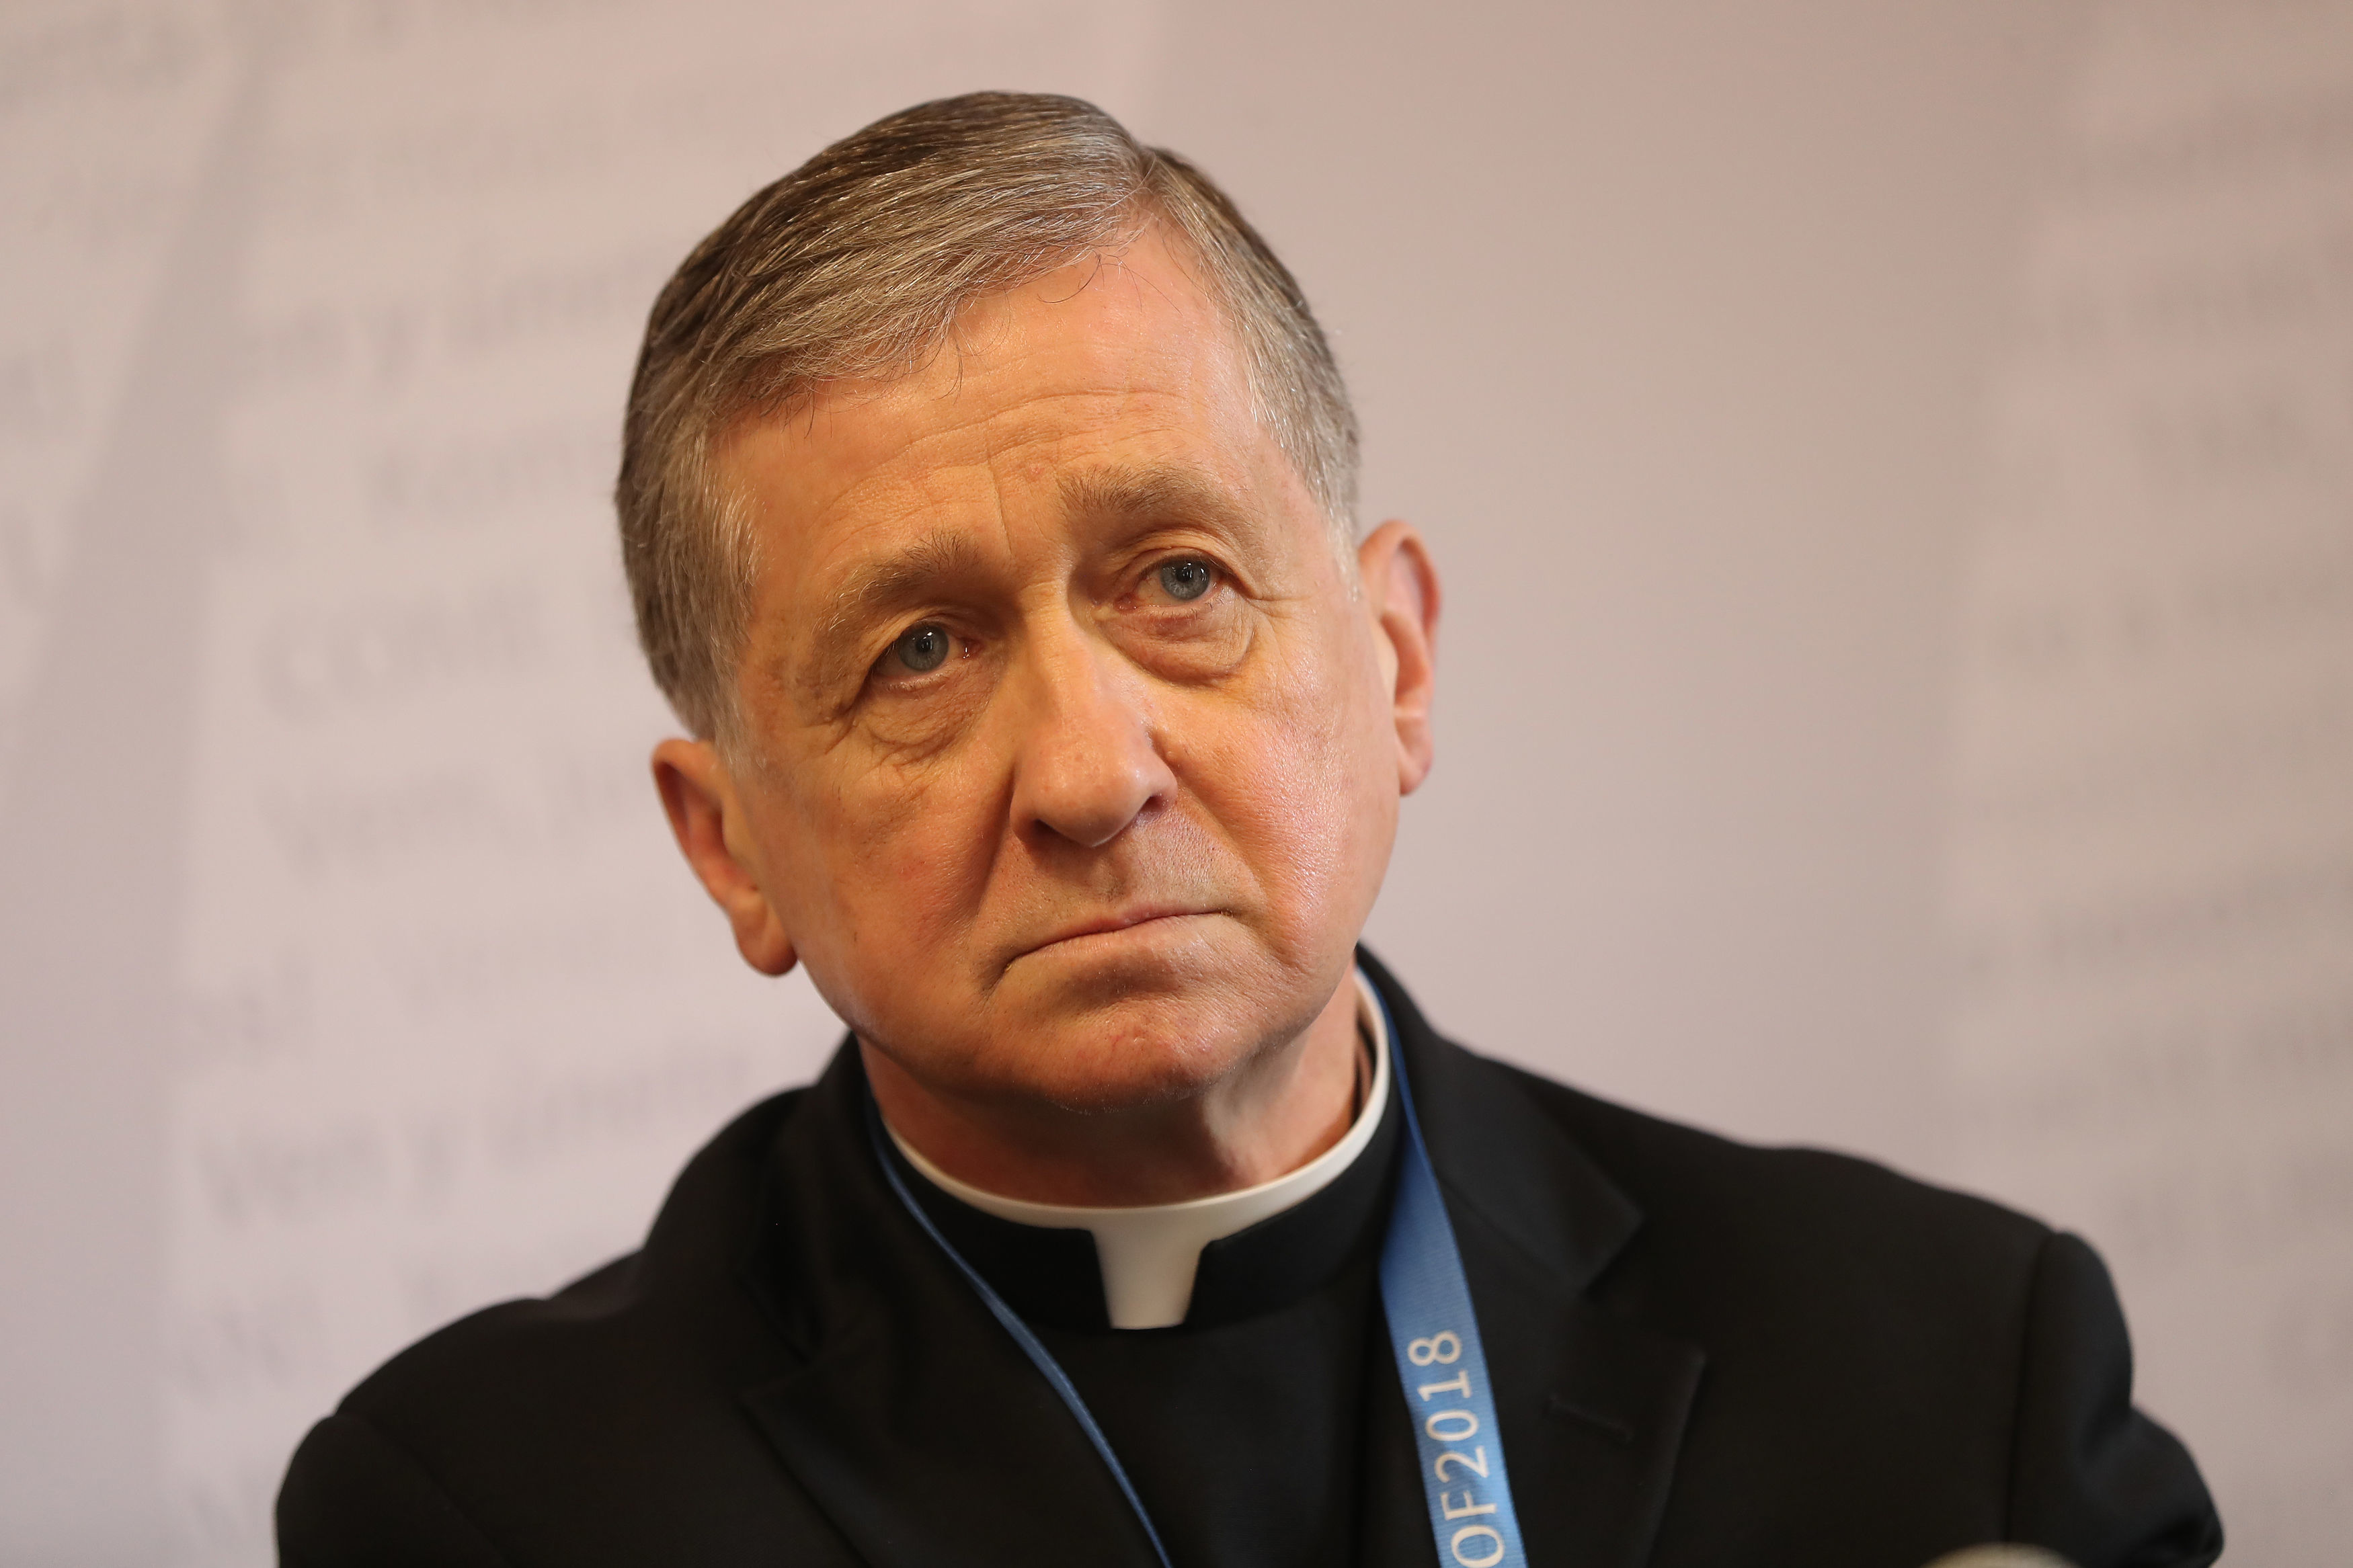 Cardinal says Viganò letter is a "destructive" manipulation of abuse crisis